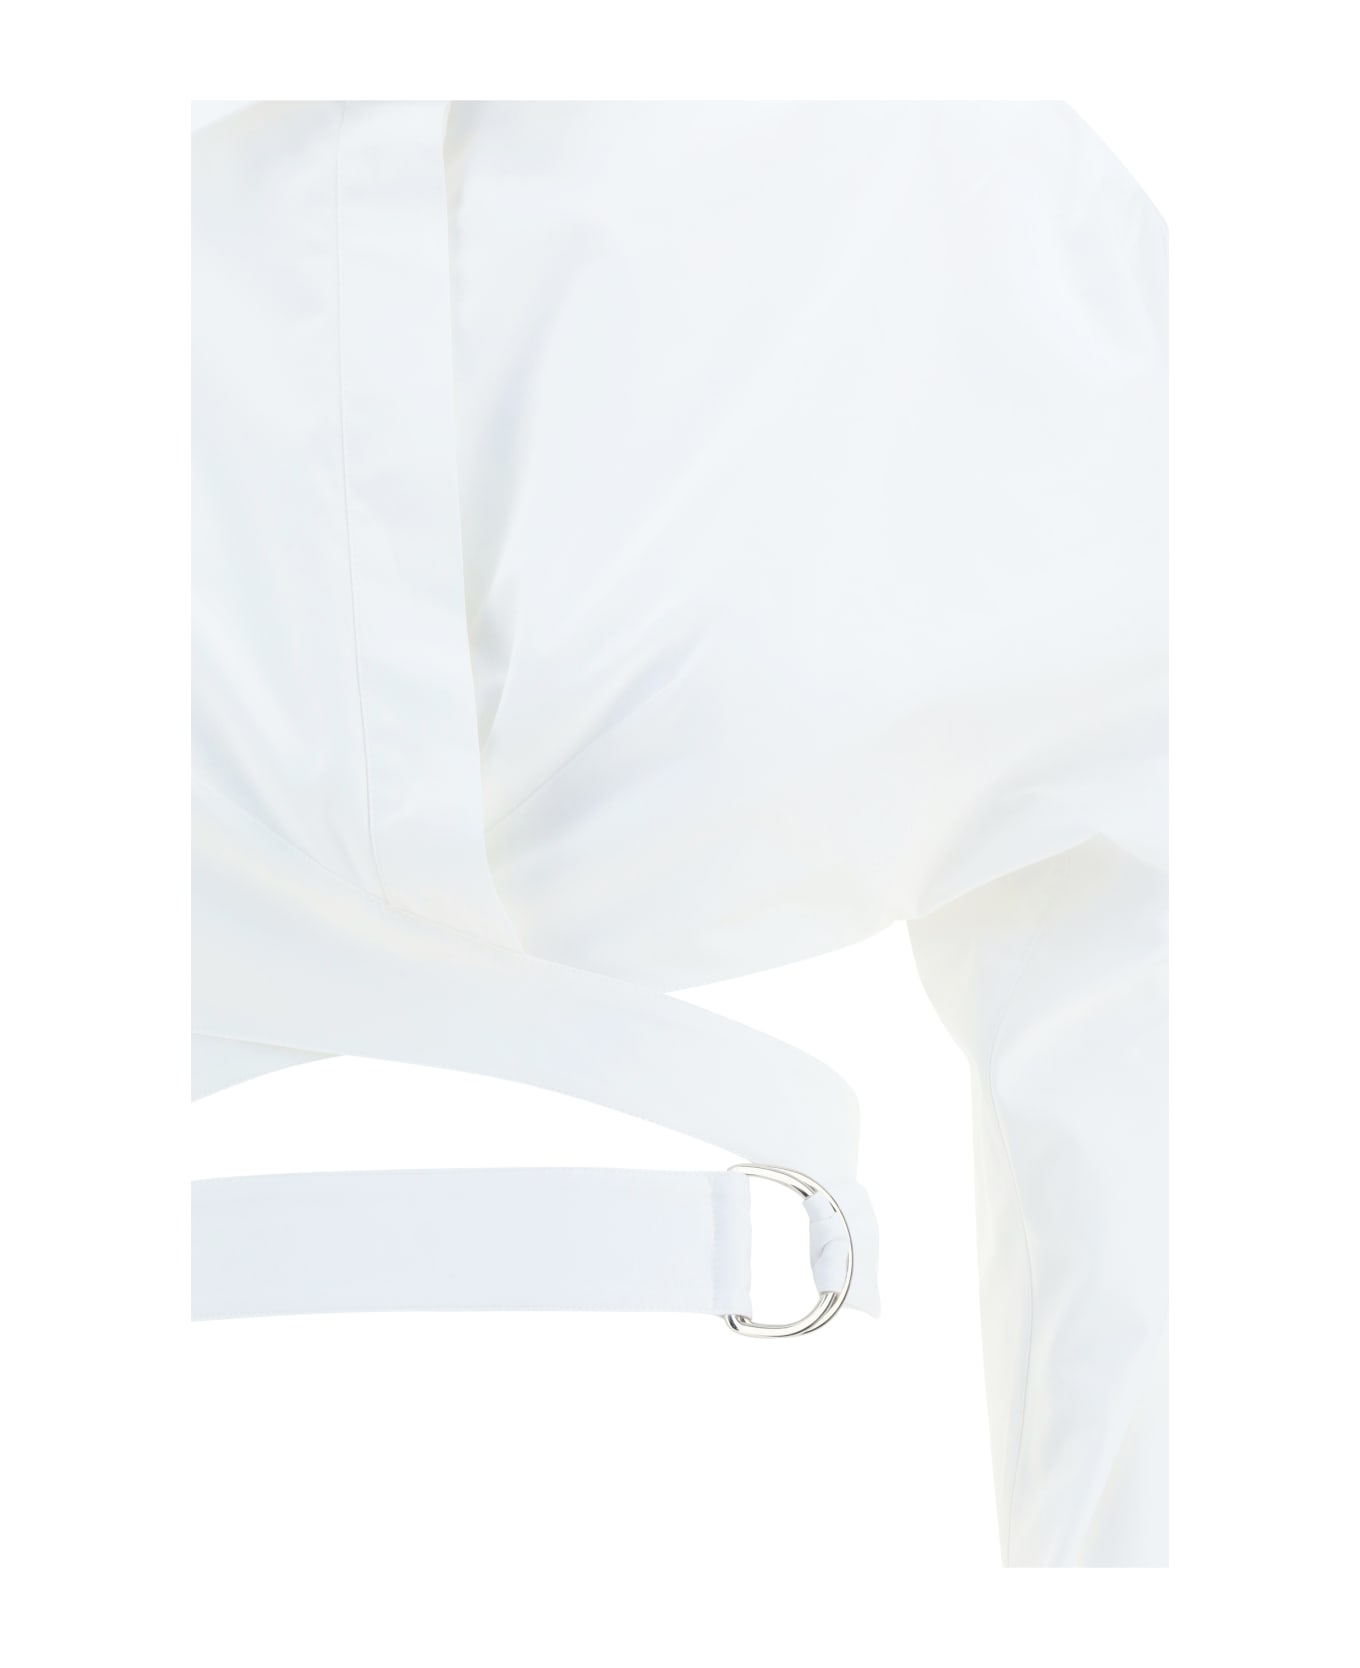 Alaia Japanese Shirt - WHITE